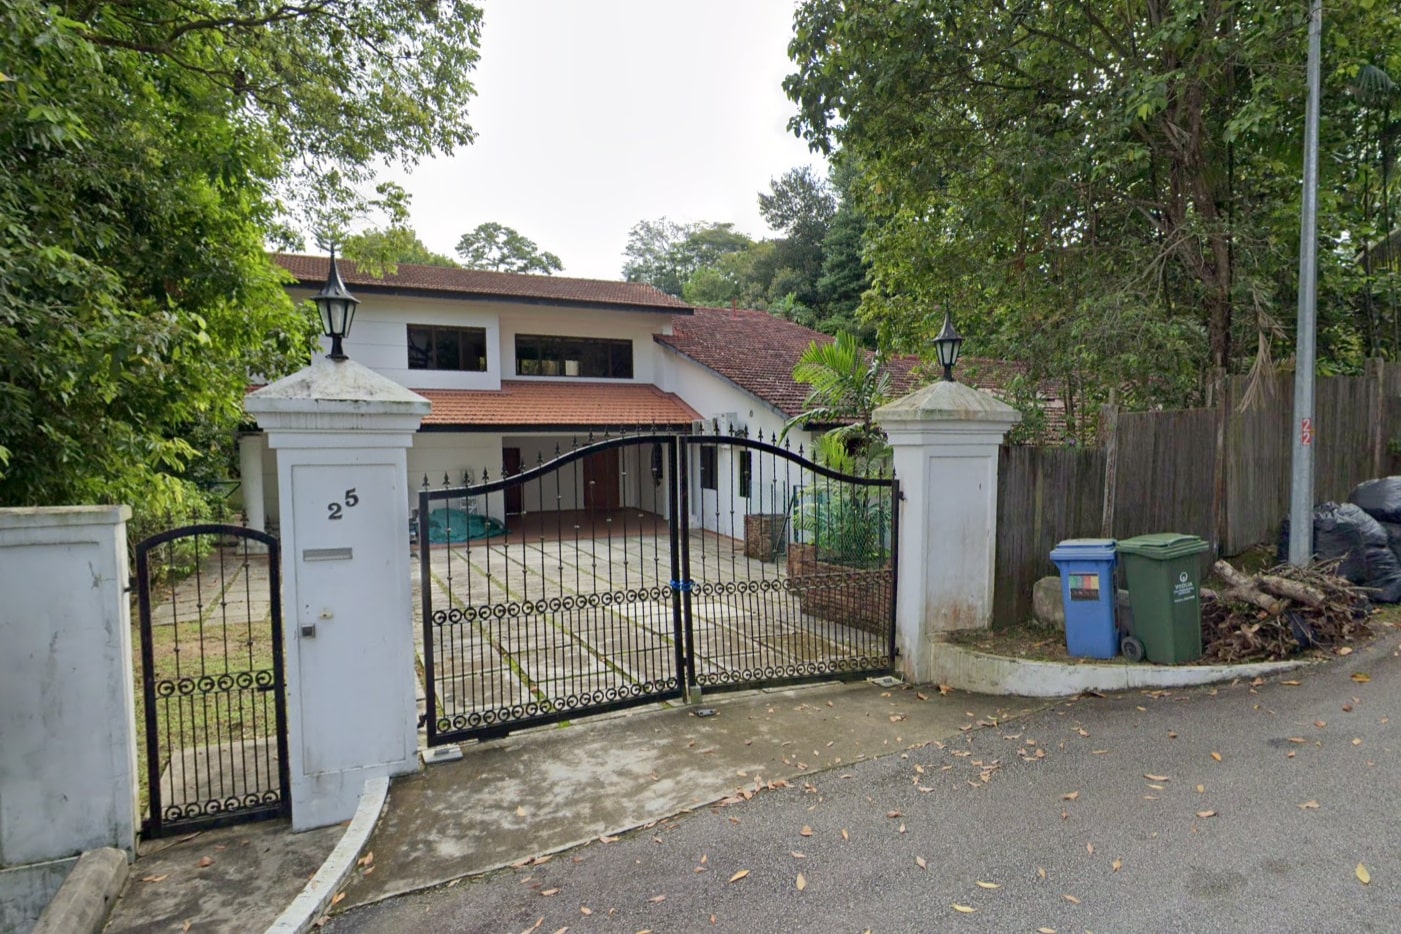 Three Arrows CEO Zhu Su Seeks to Sell Luxury Singapore Mansion – Reports